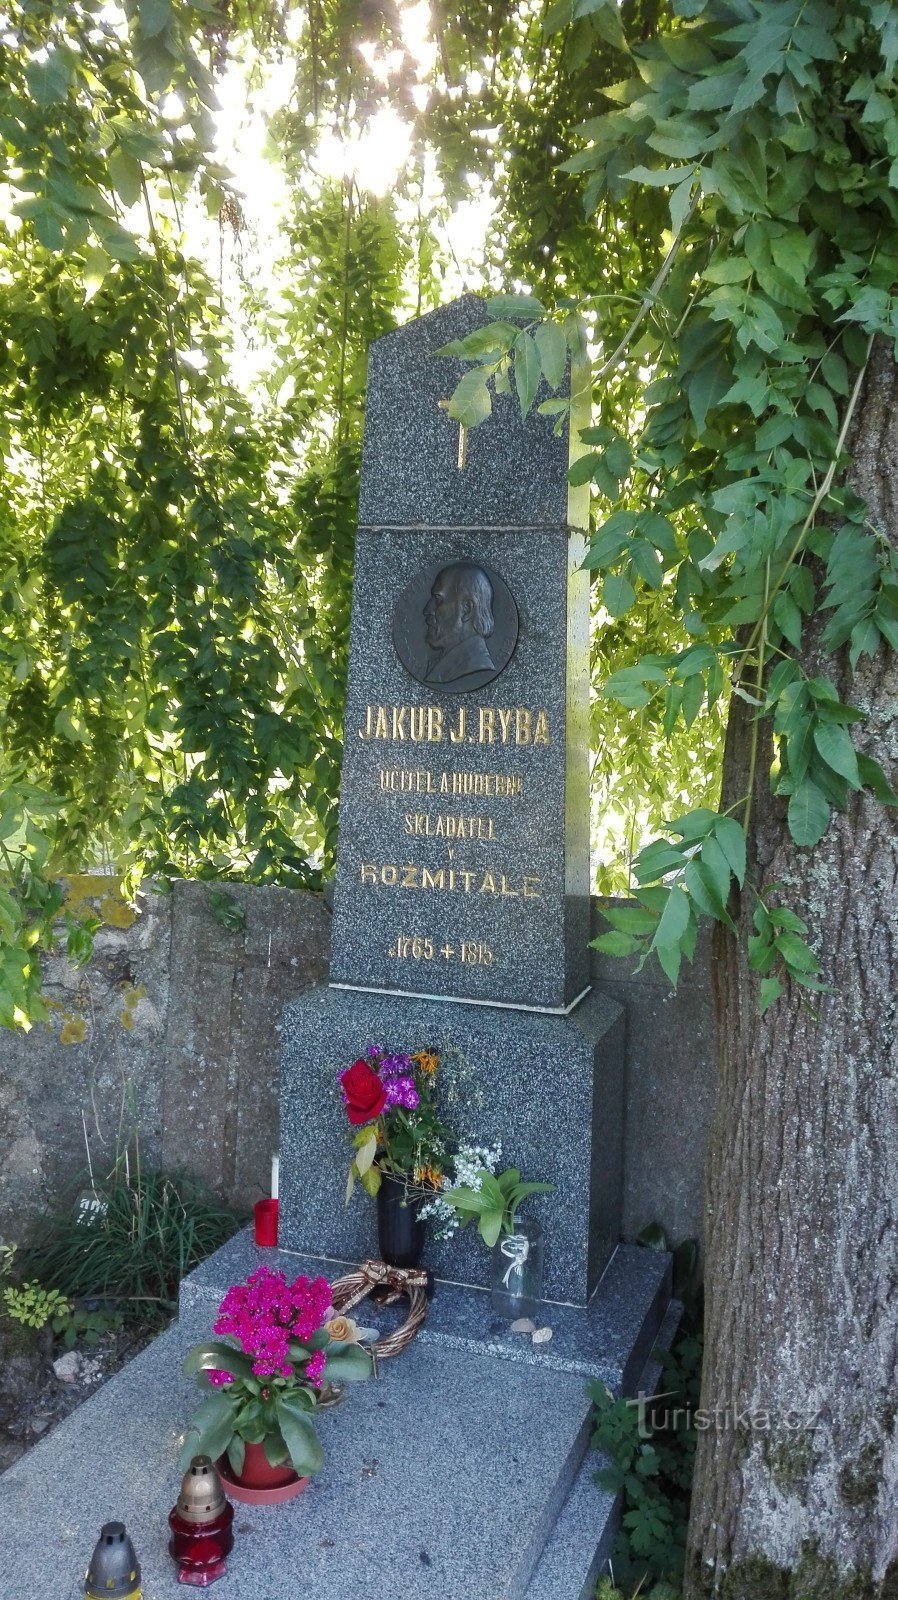 Staré Rožmitál にある JJRyba の記念碑。